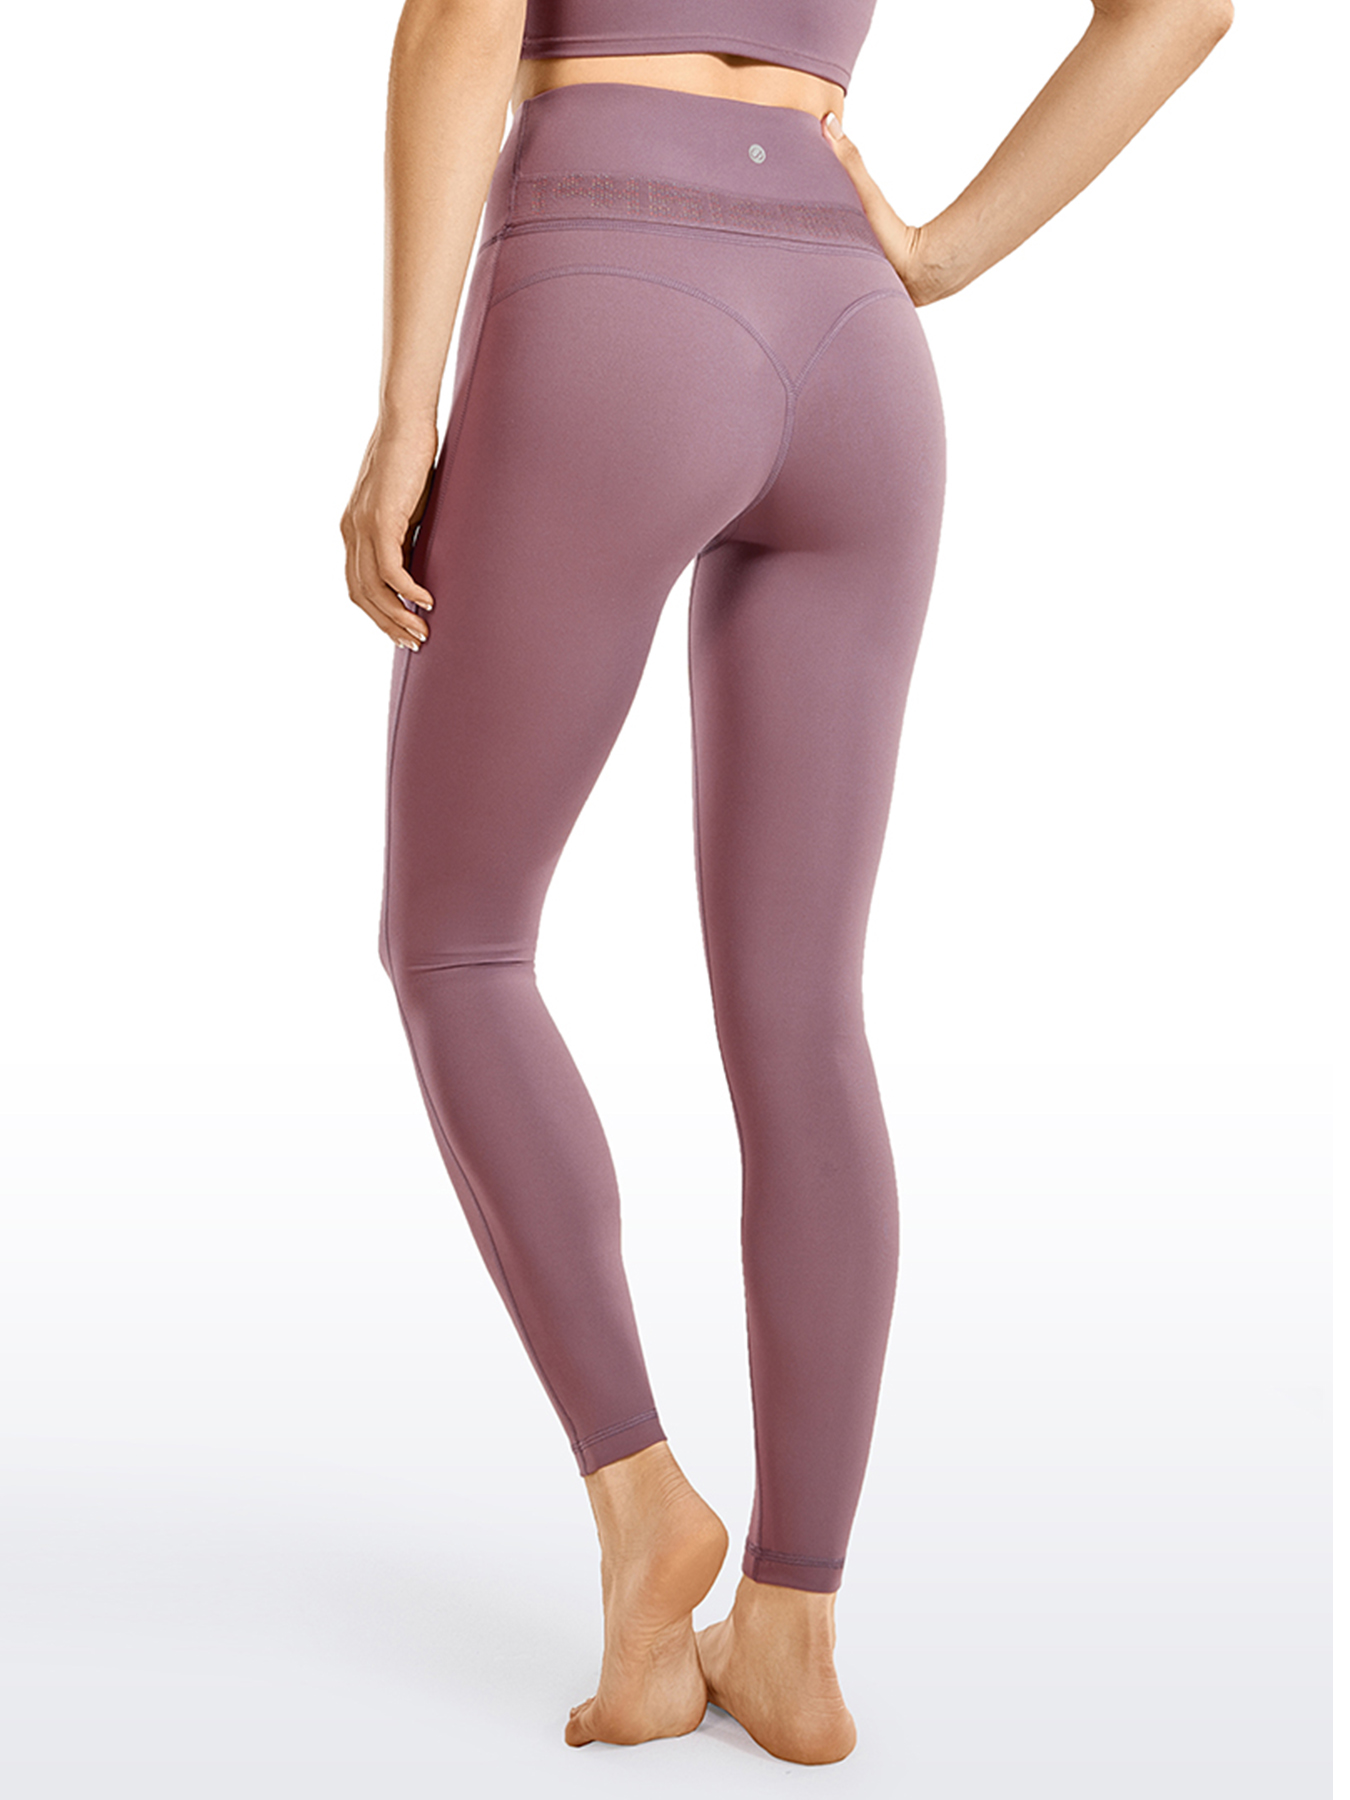 Yoga Pants For Women With Pockets Women's High Waist Pockets Running  Tie-Dye Pants Workout Leggings Yoga Pants Je2515 